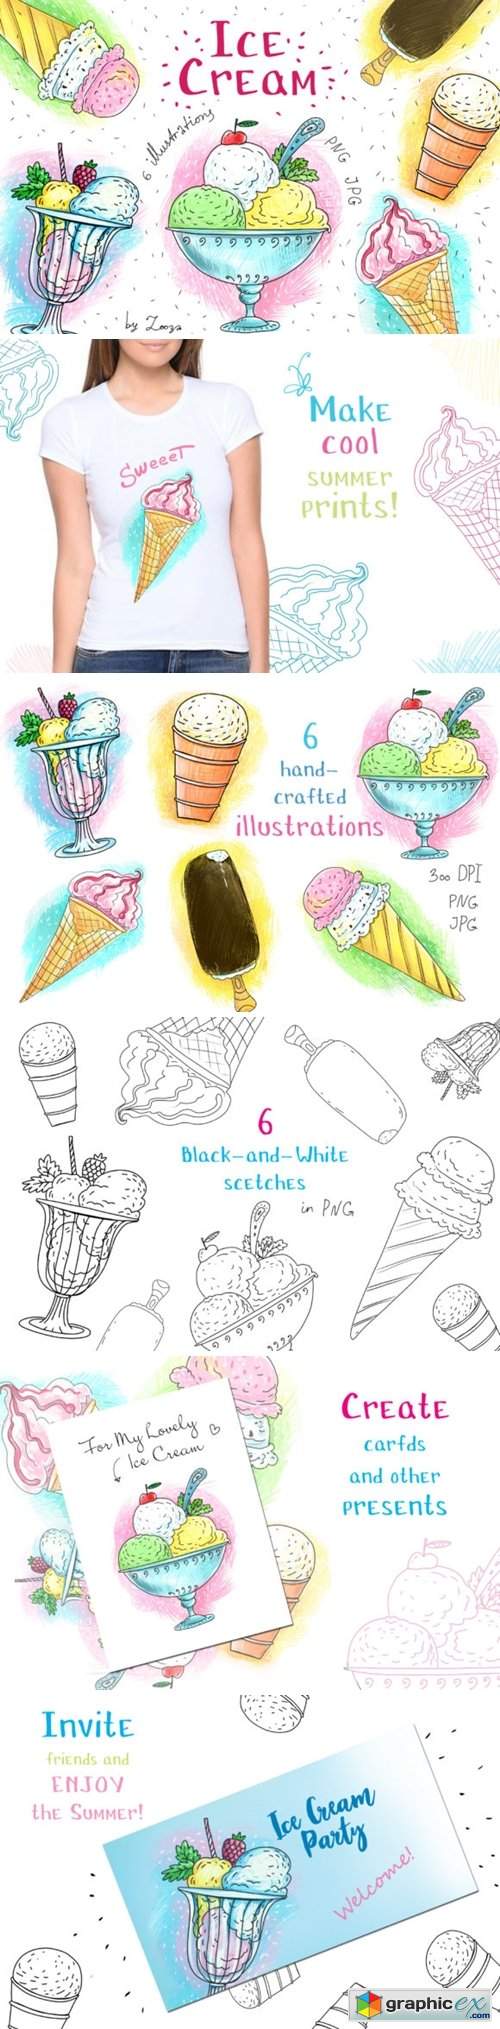 Ice Cream - 6 Hand-crafted Illustrations